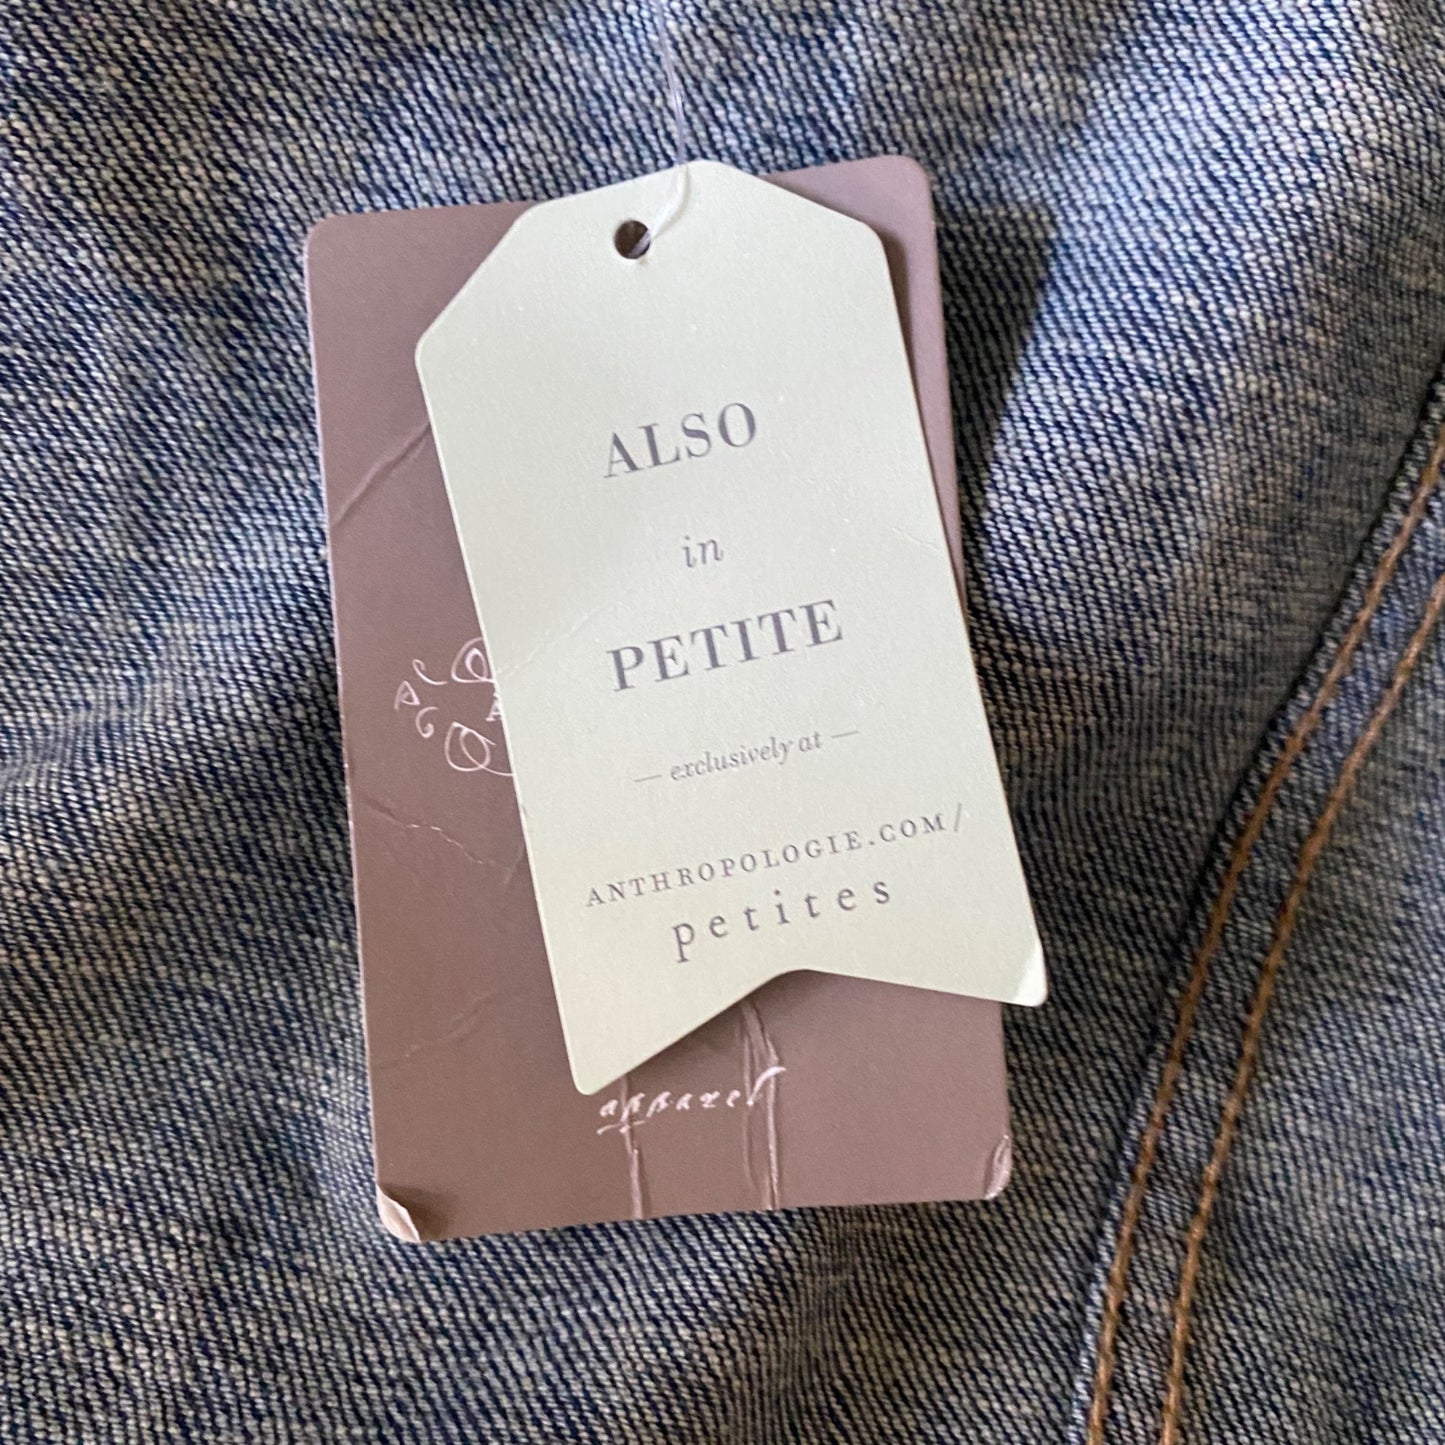 Anthropologie Pilcro sz S cotton Long sleeve button NWT Jean Jacket